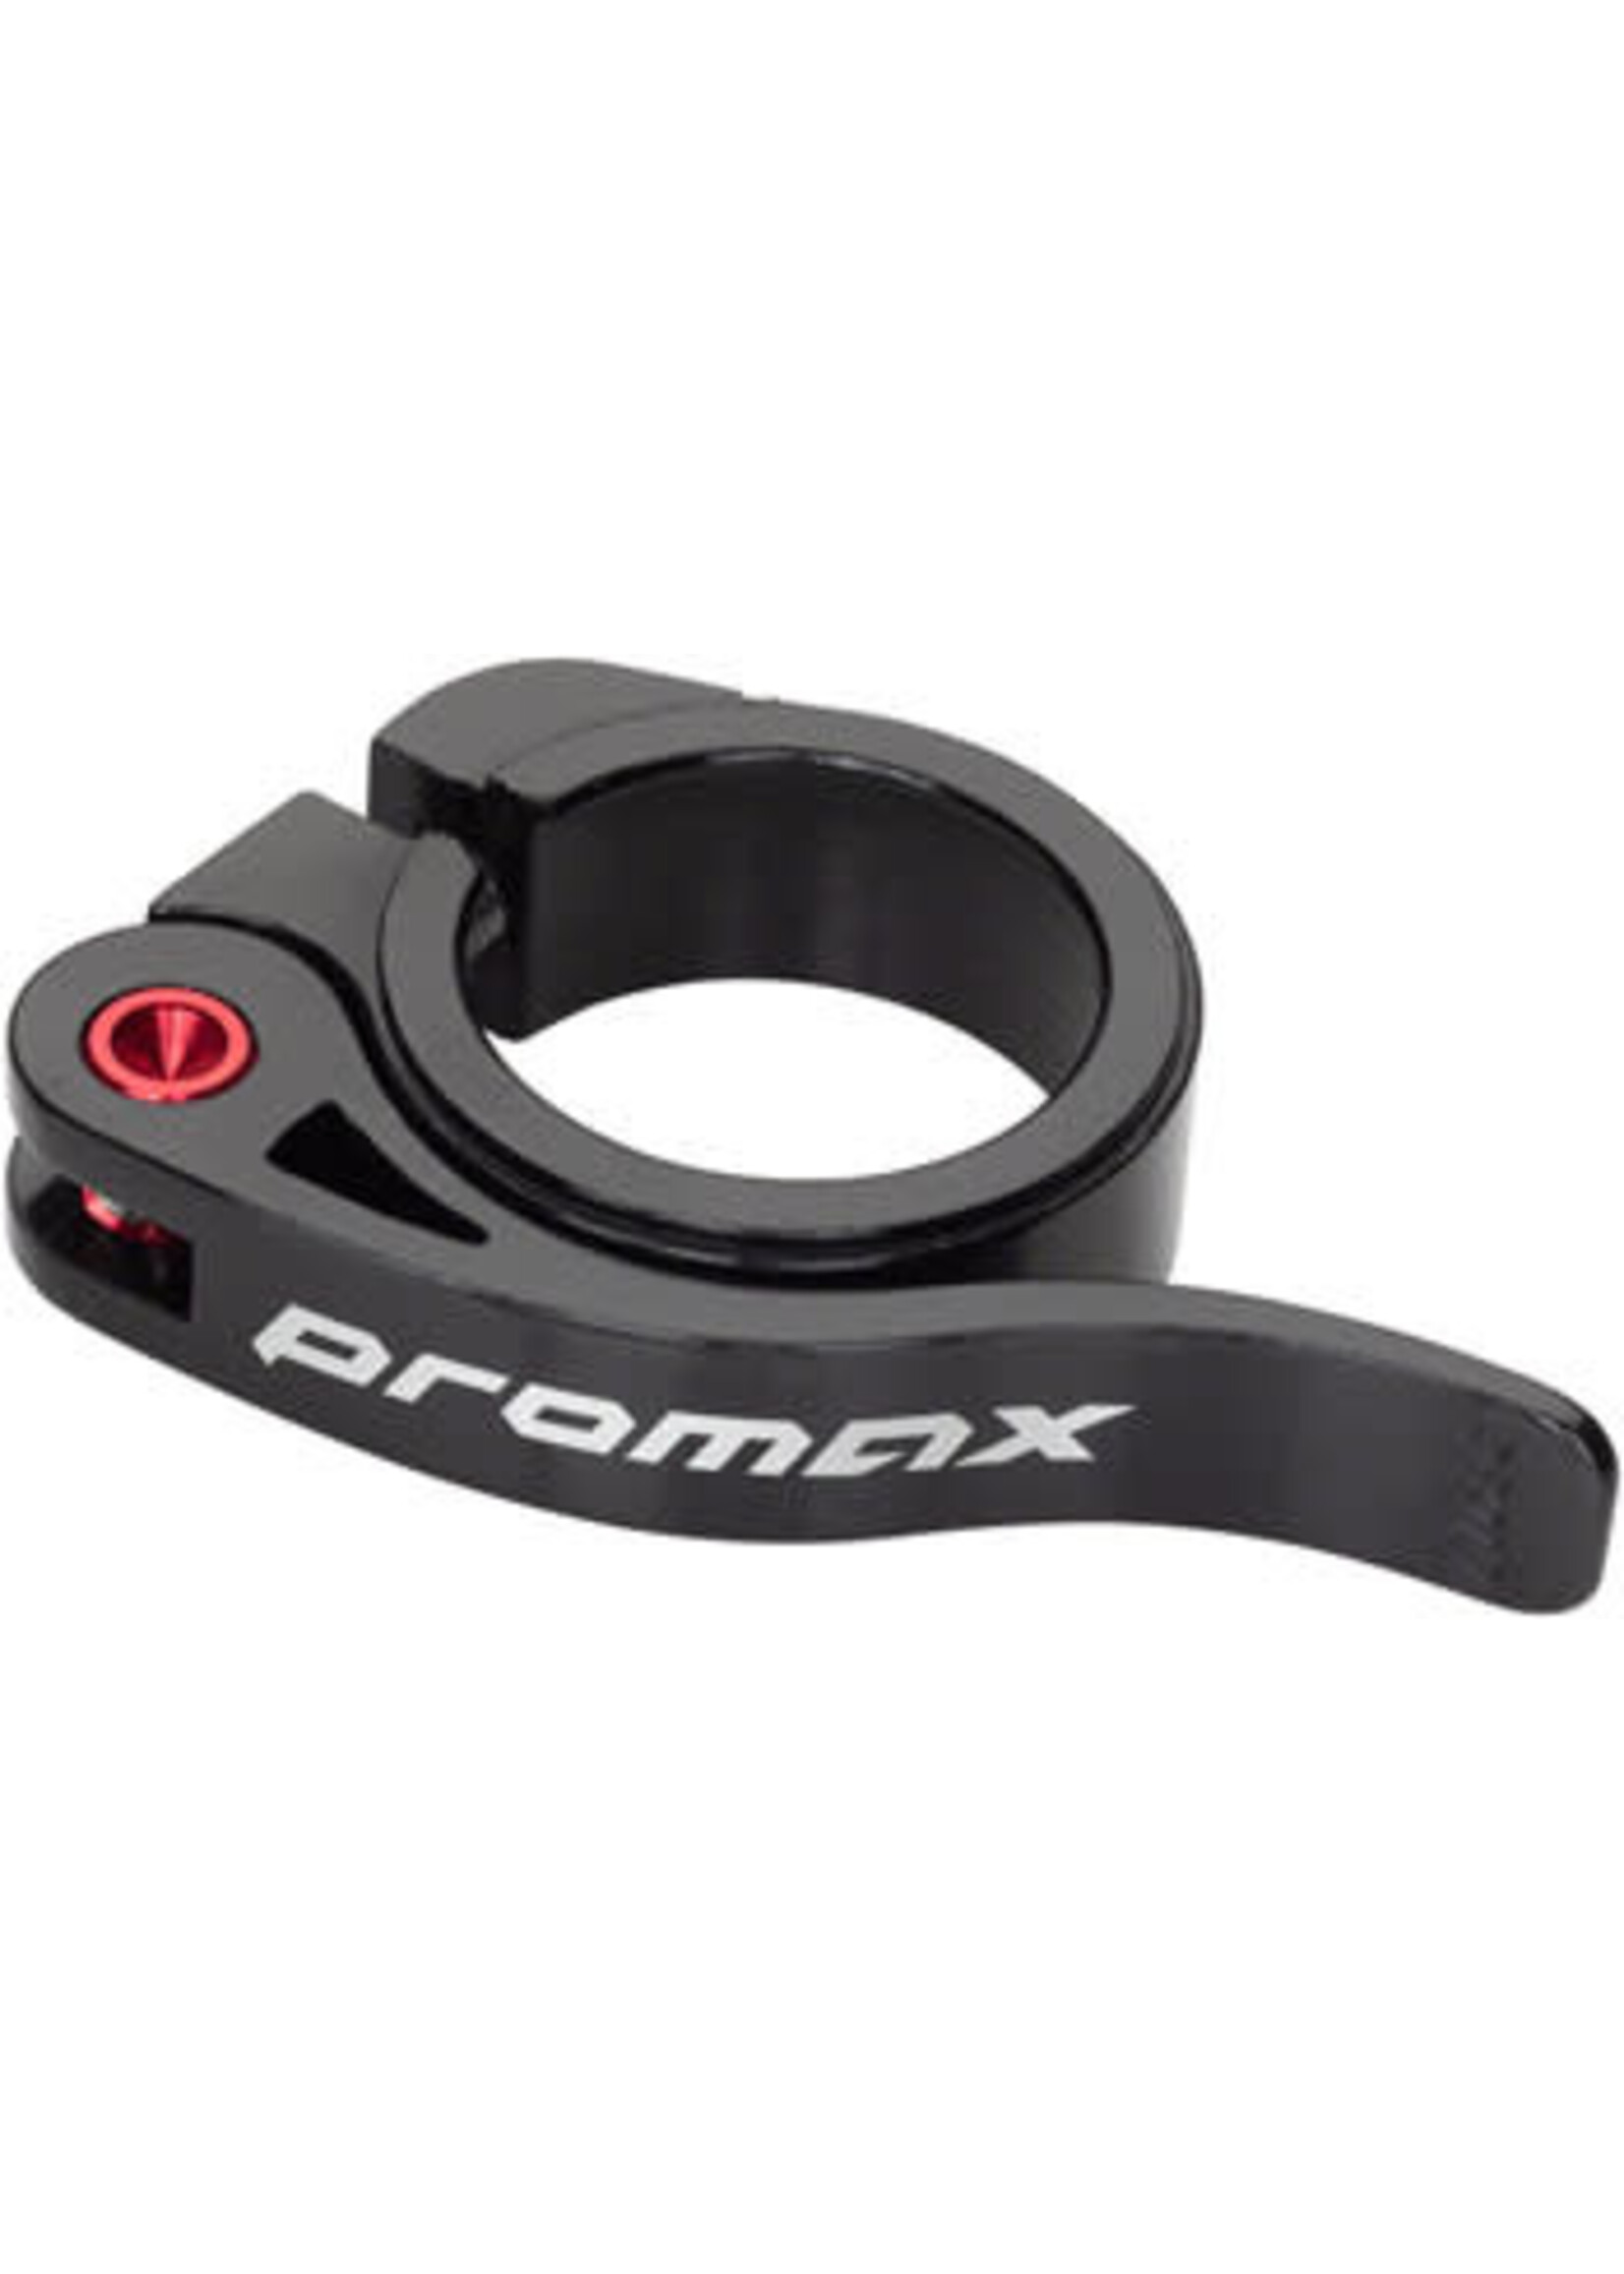 Promax Promax 335QX Quick Release Seatpost Clamp - 35mm